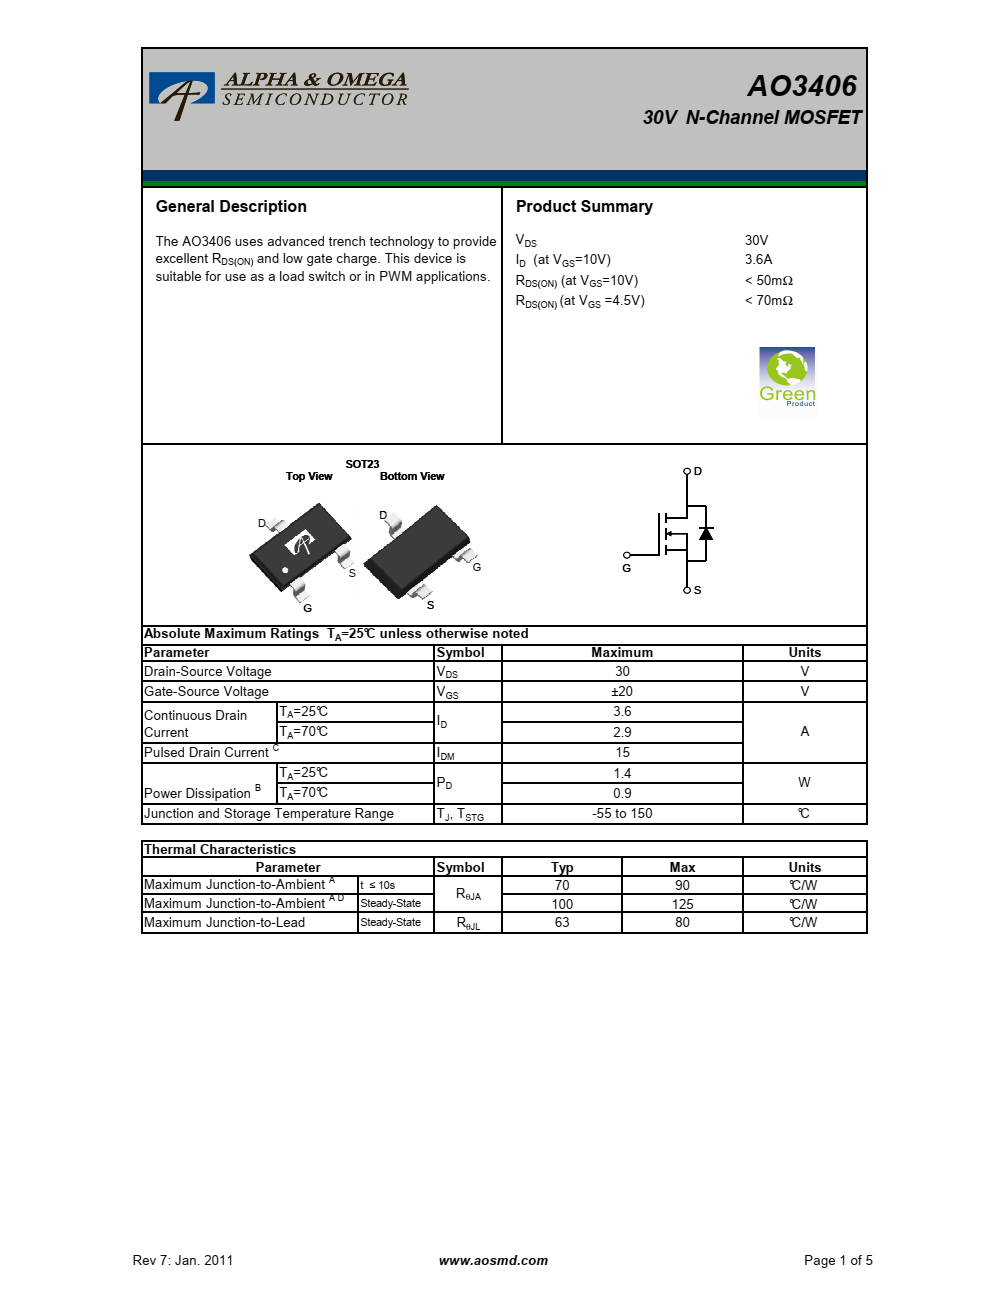 AO3406采用先进的沟槽技术，提供卓越的RDS（ON）和低栅极电荷